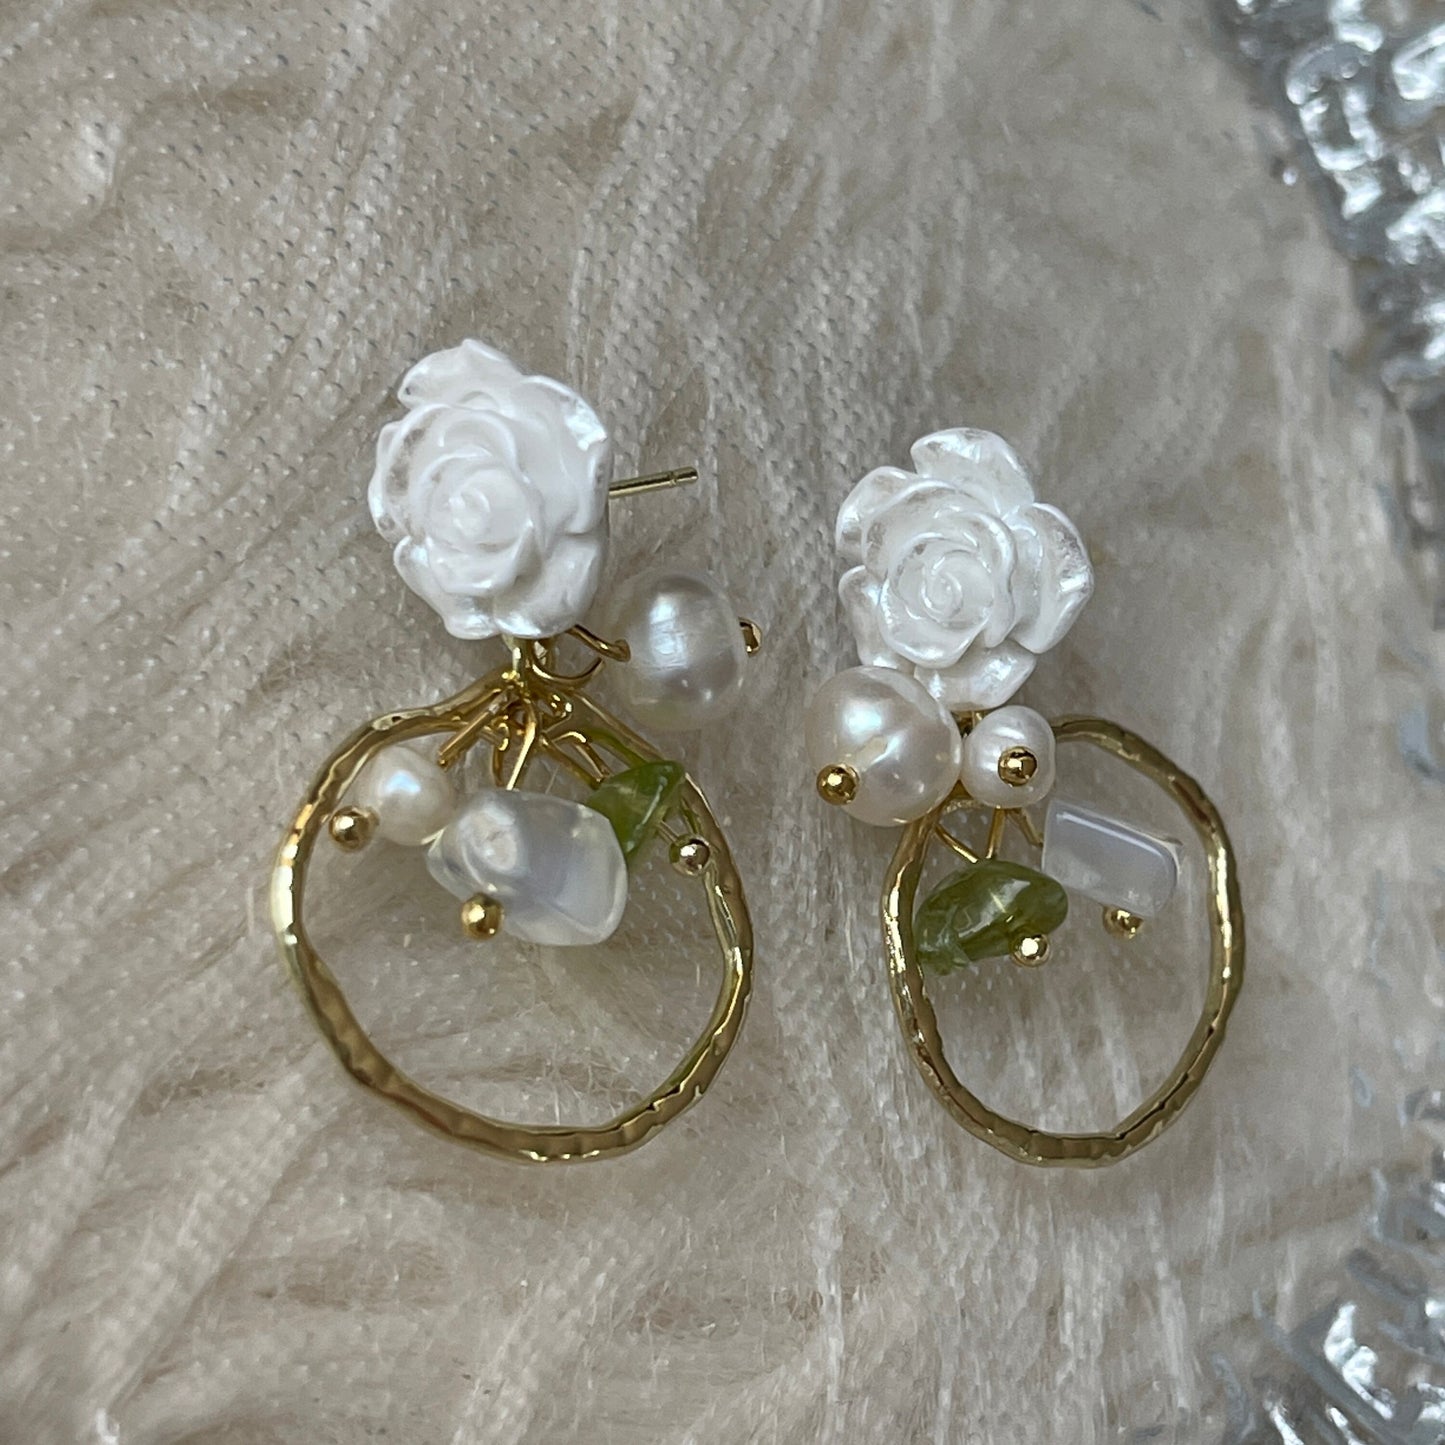 Cupid earrings, Rose flower earrings, Gold hoop dangle, White rose pearl earrings, Dainty flower statement earrings, Delicate handmade gift